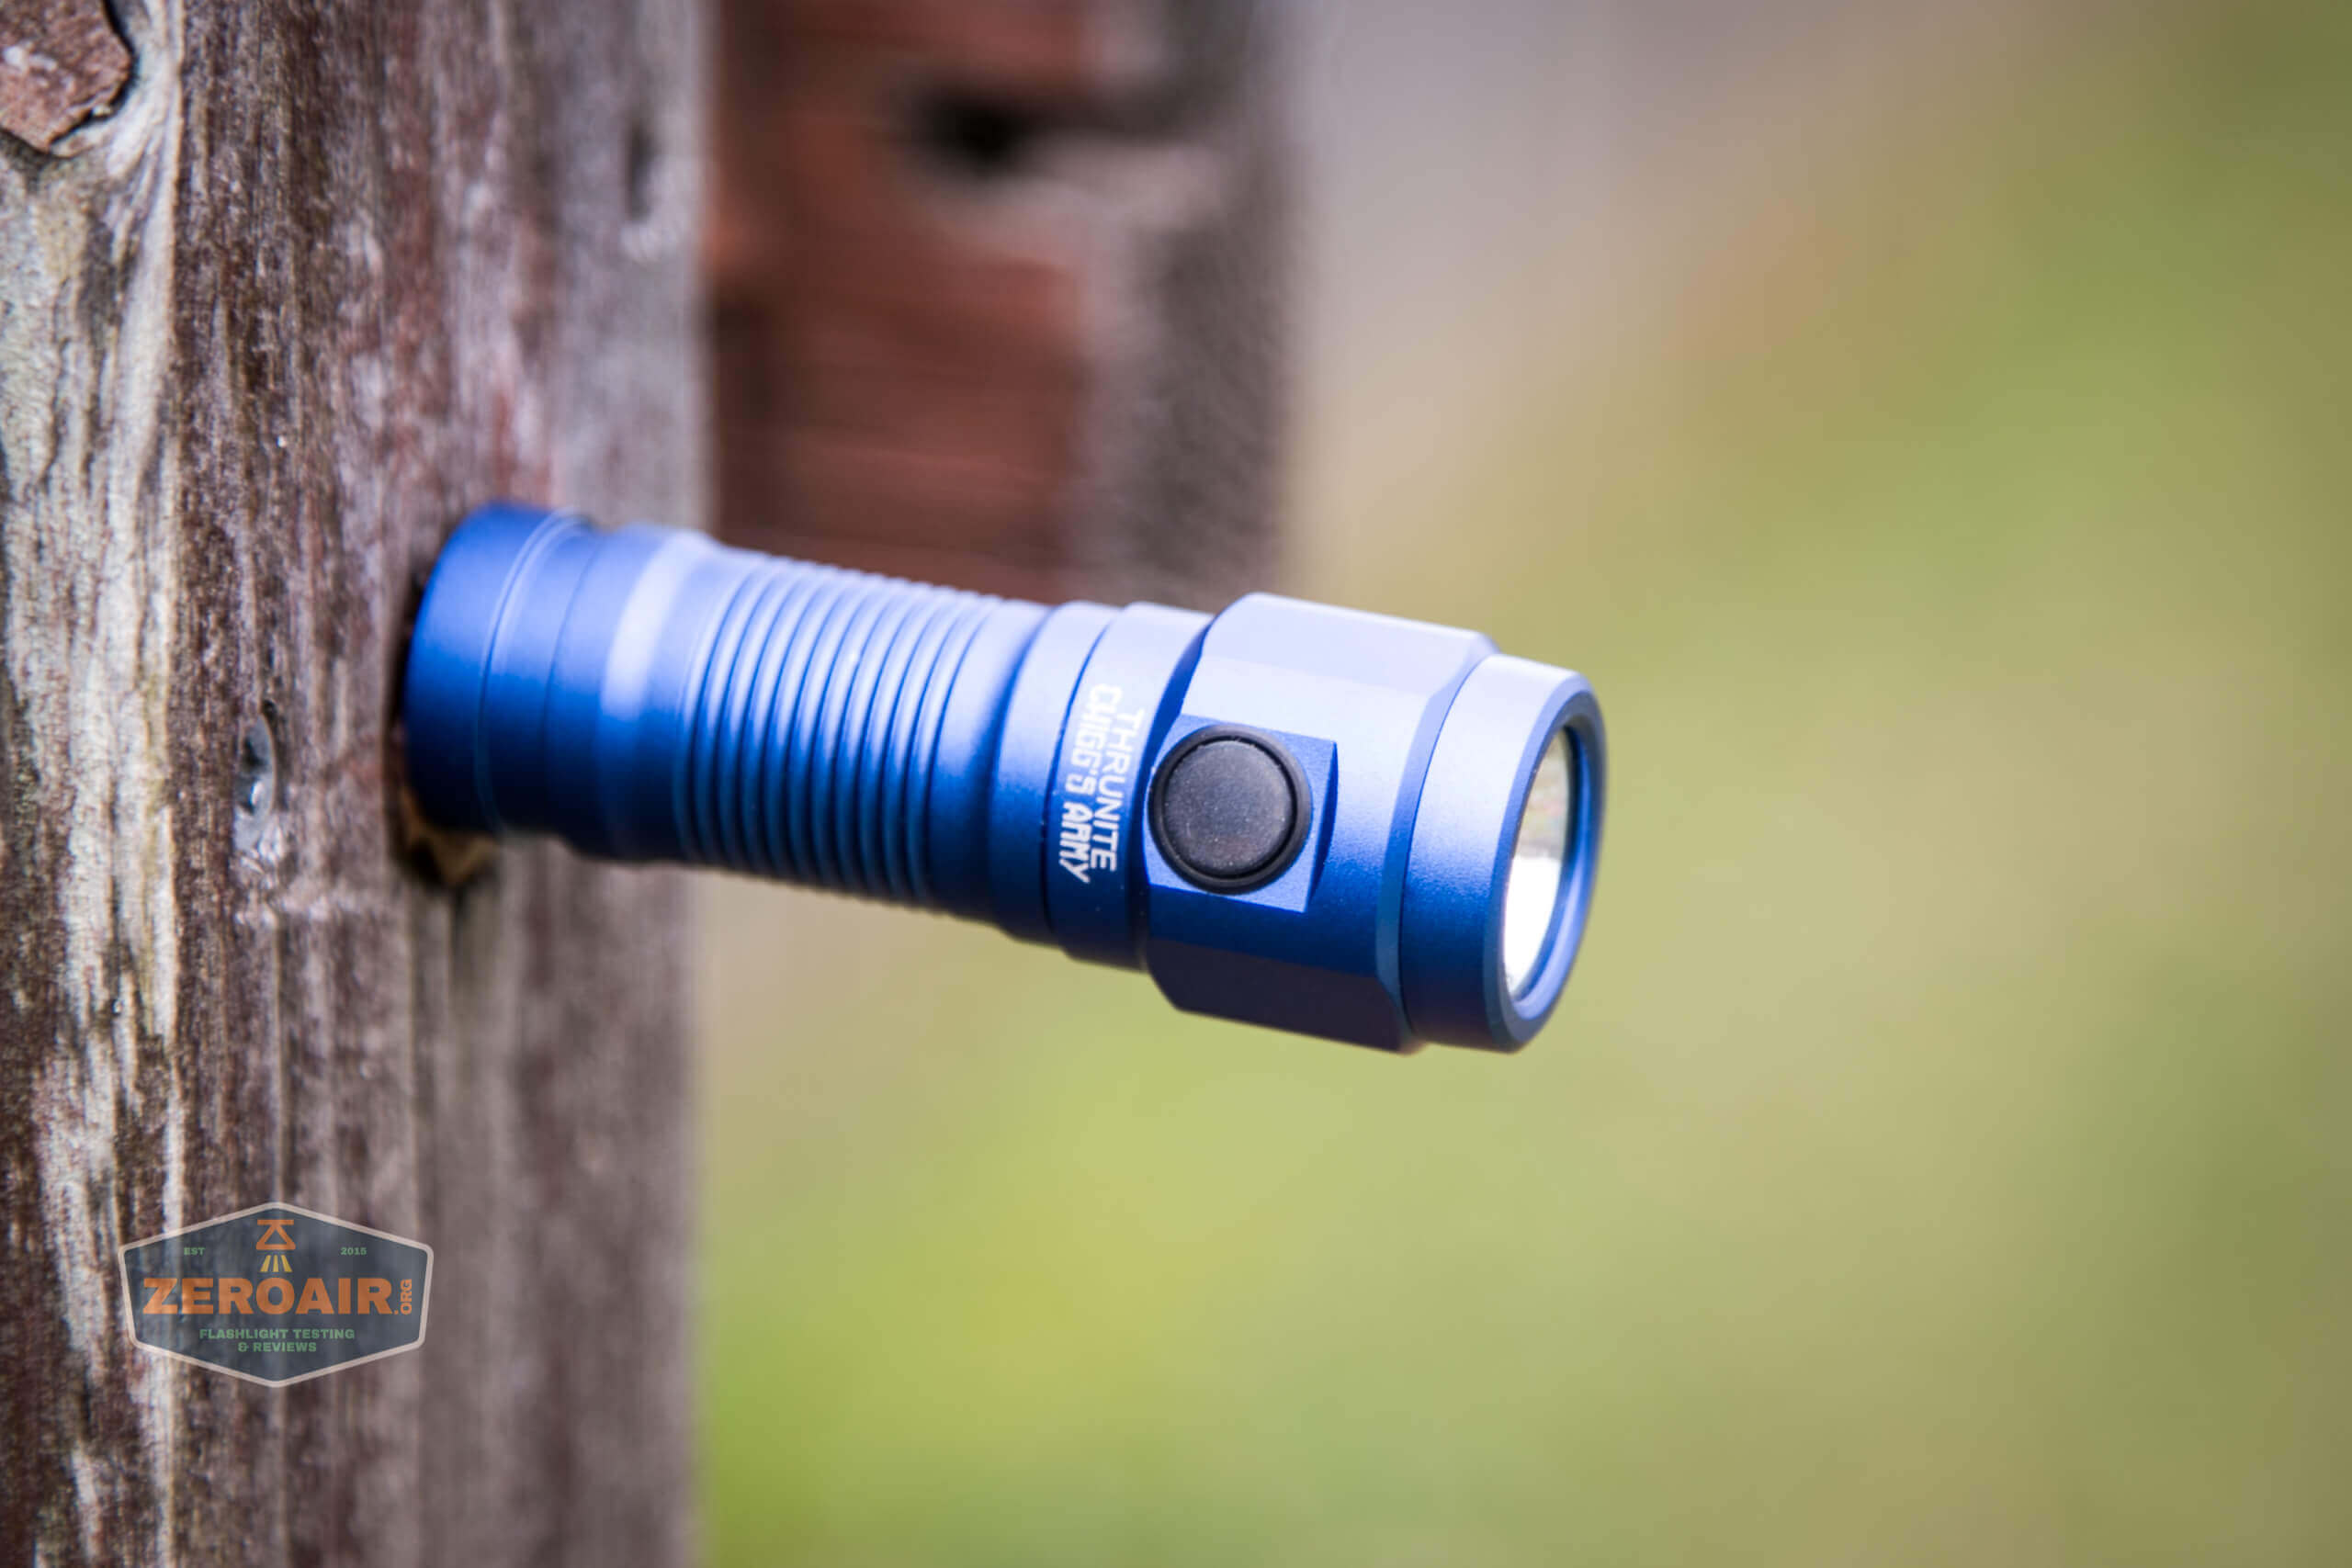 Blue THRUNITE W1 Customized Edition with Aquachigger Max 693 Lumens EDC Flashlight with Magnetic Tailcap Rechargeable Mini LED Flashlight Pocket Flashlight 